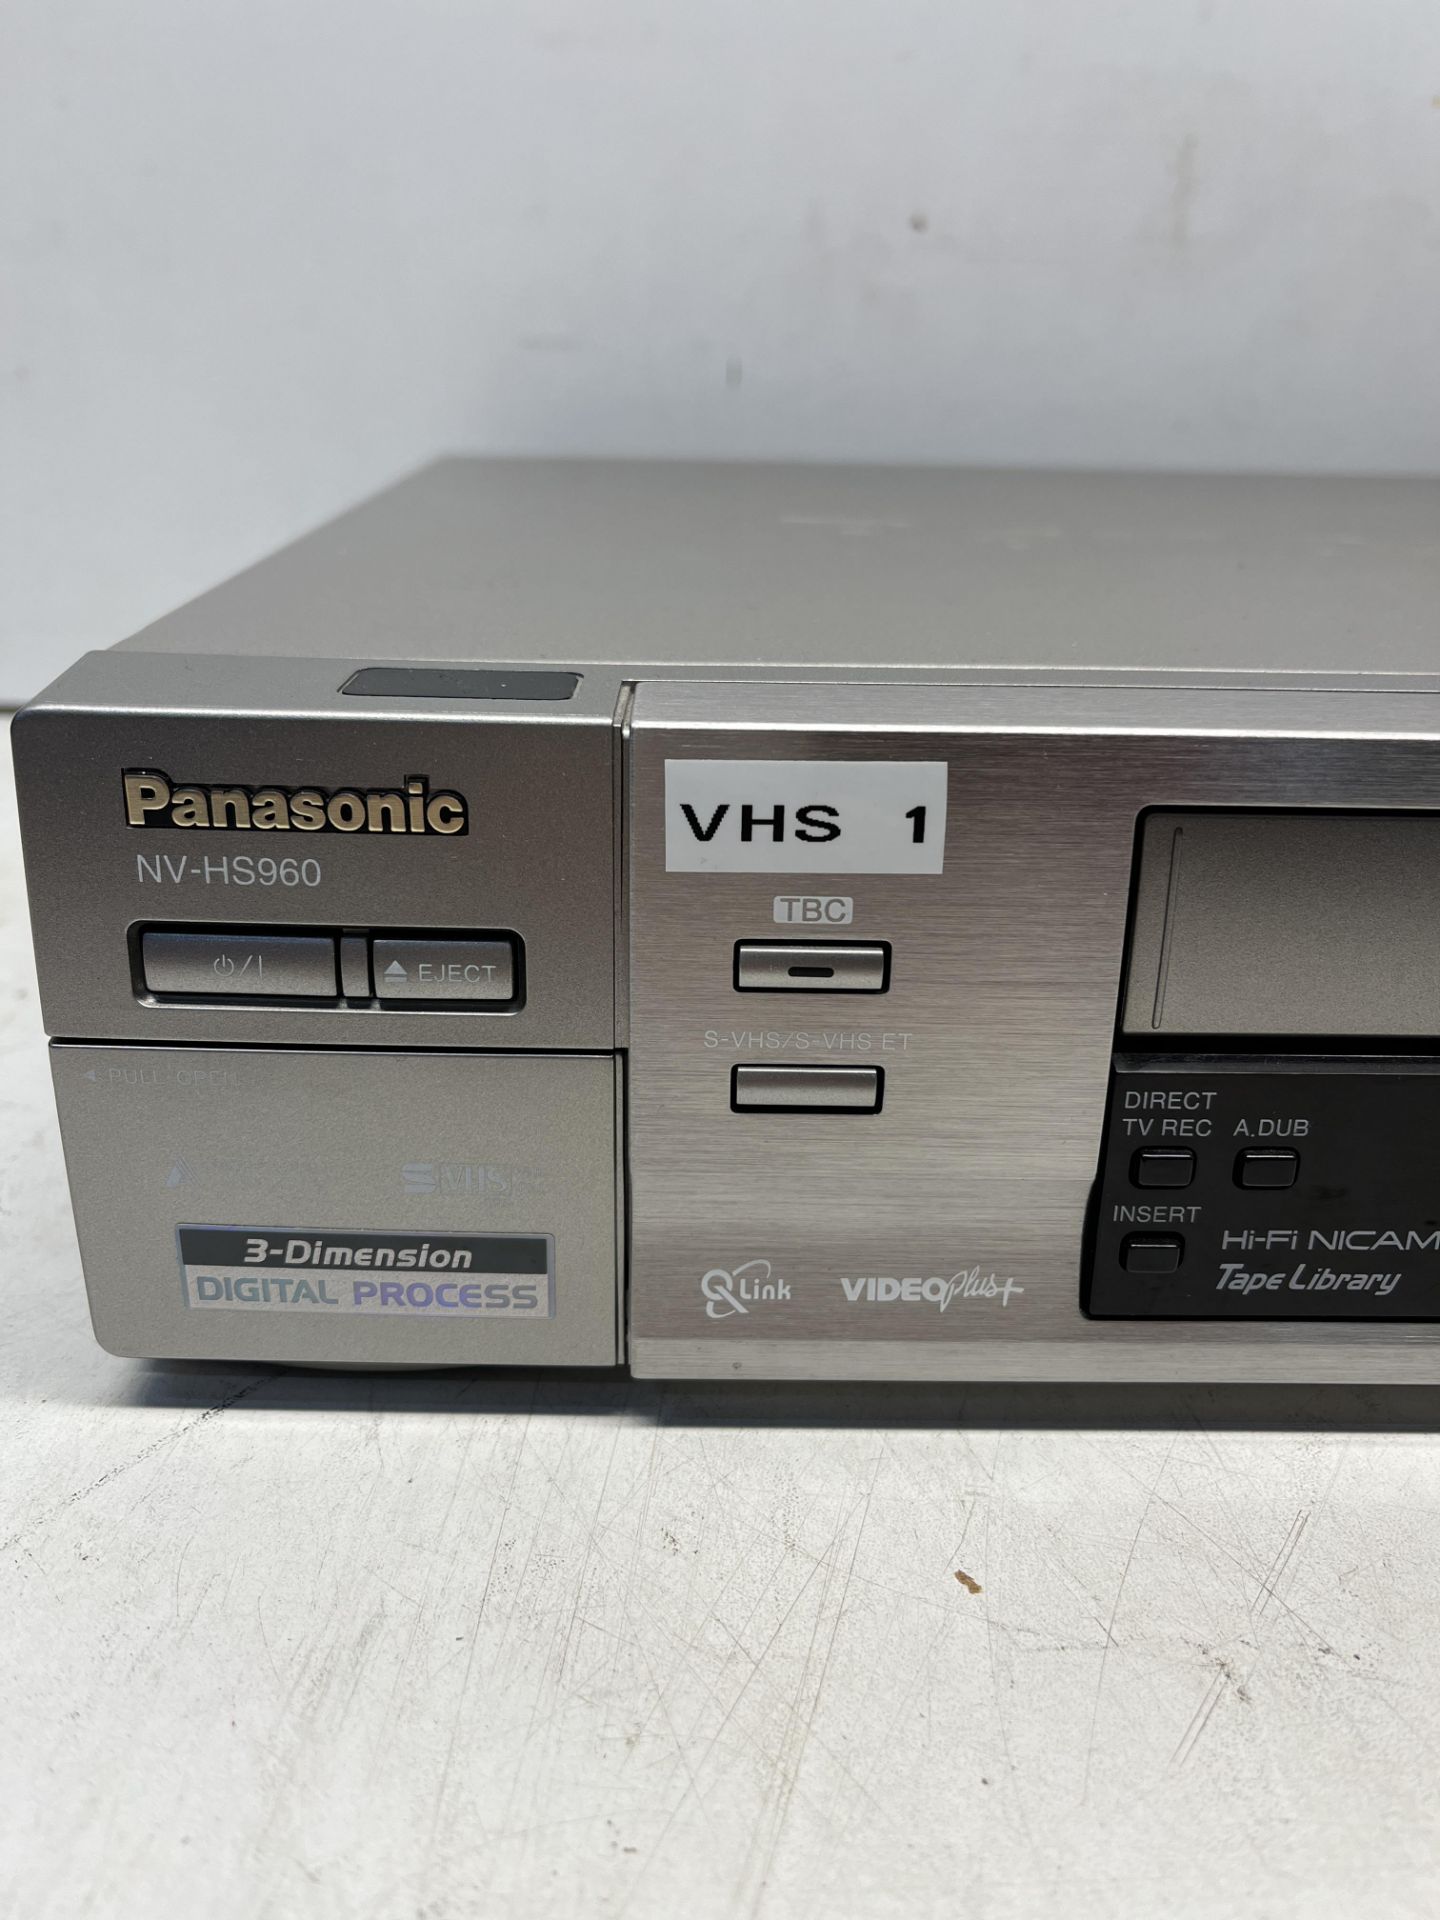 Panasonic NV-HS960 High-End Super VHS Video Player Super Drive - Image 2 of 5